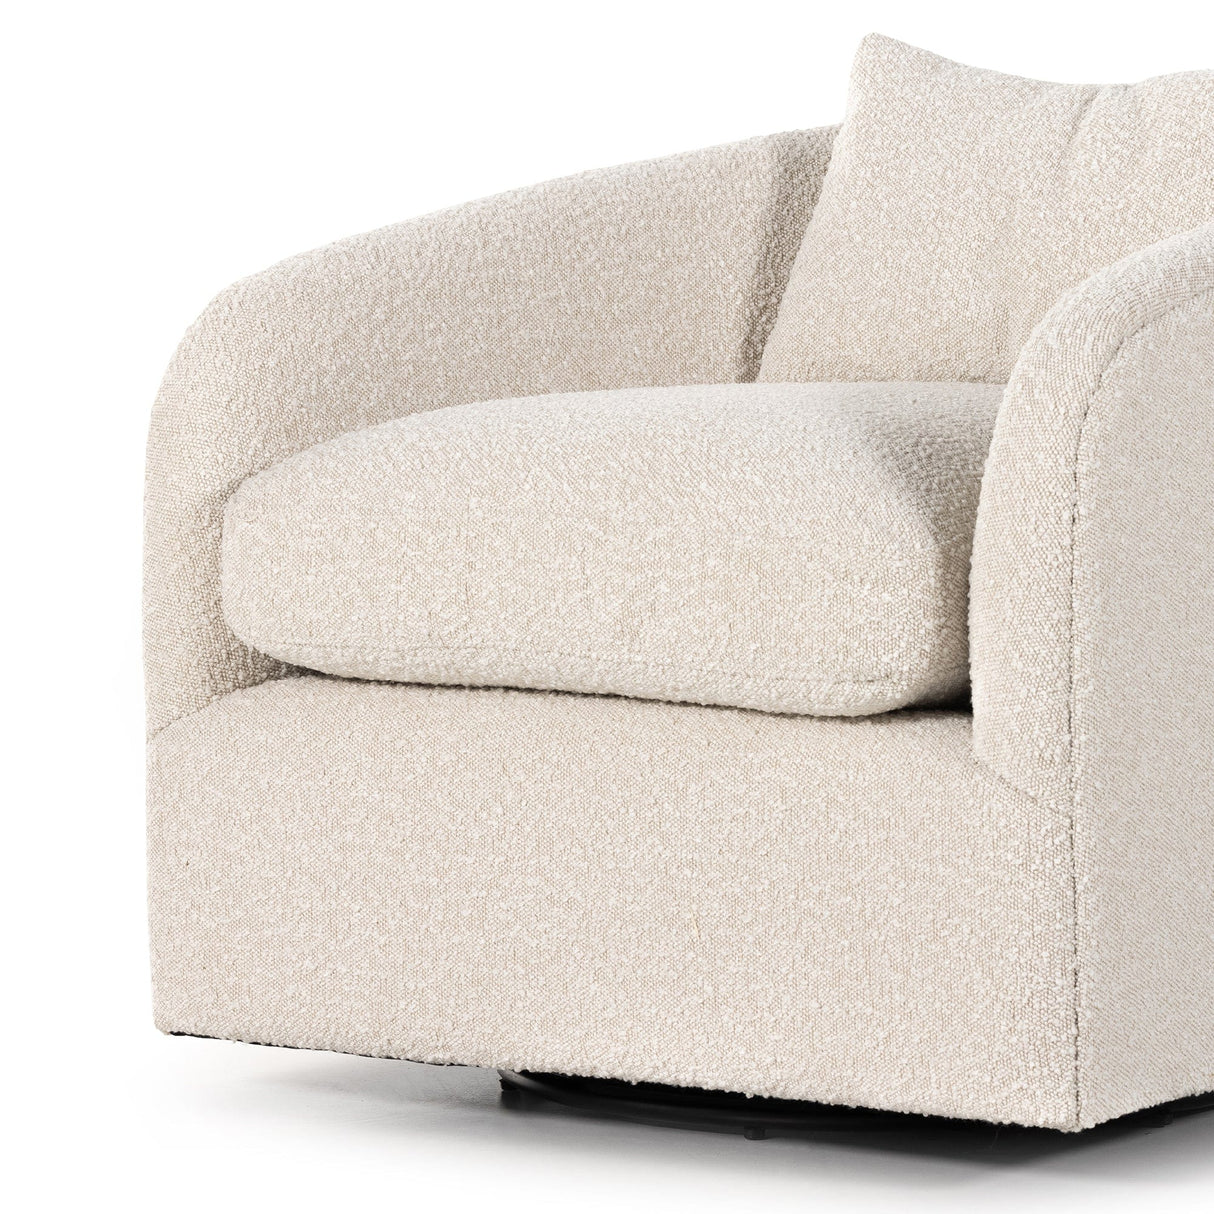 Four Hands Topanga Swivel Chair Furniture four-hands-106008-013 801542702540